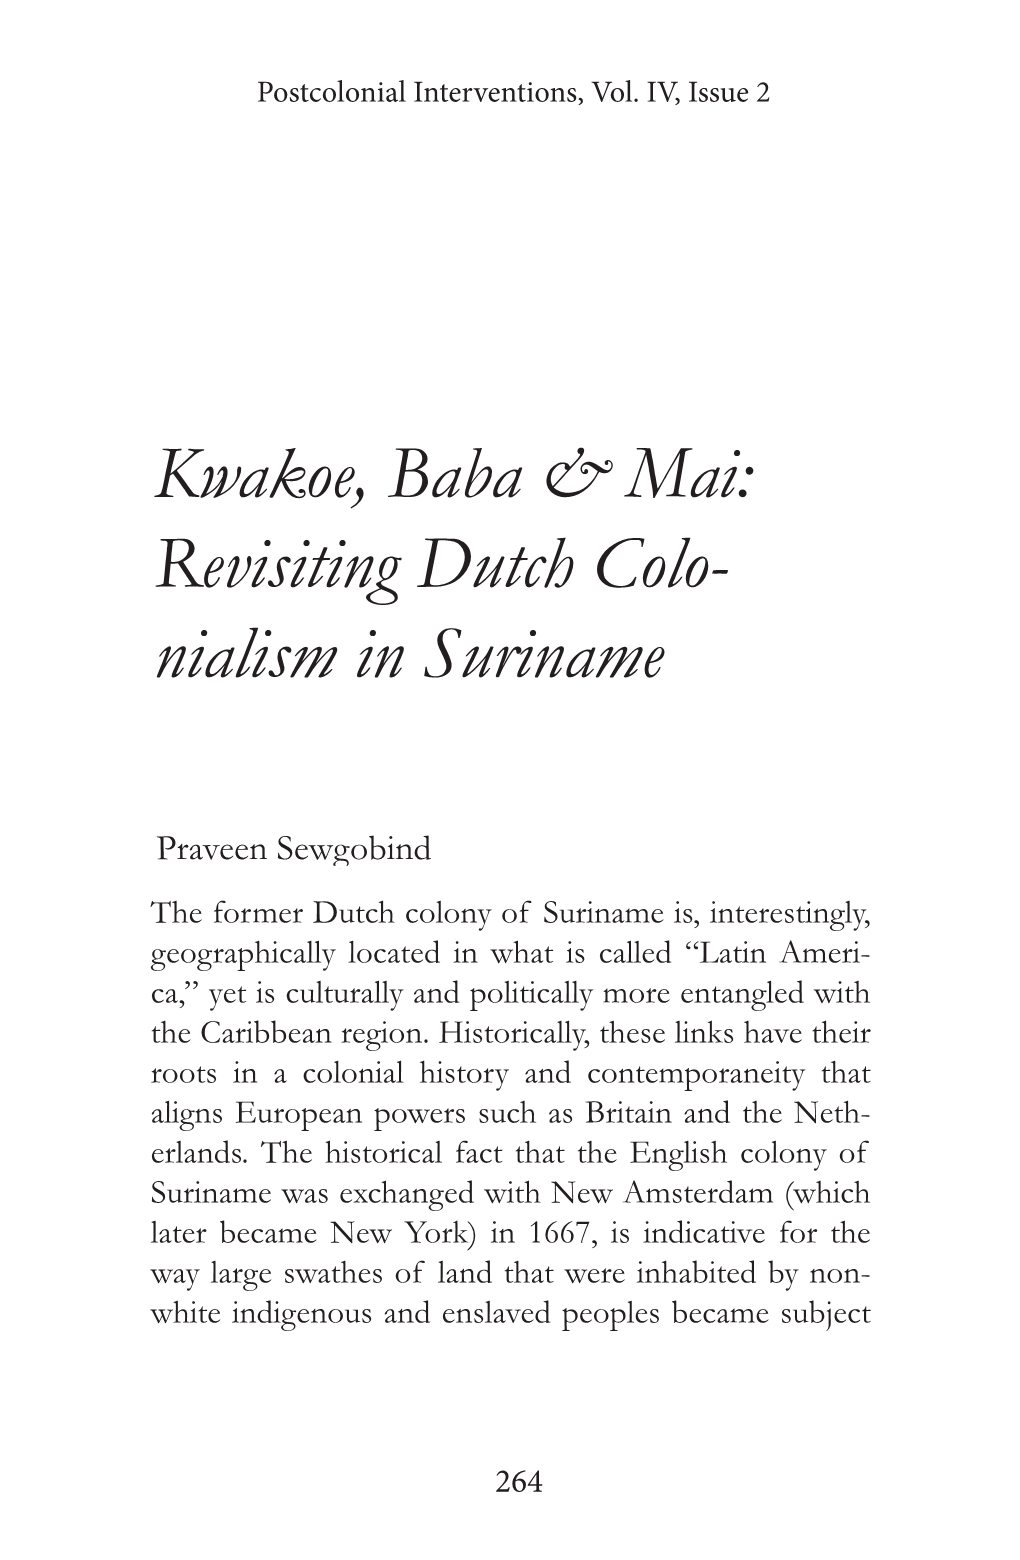 Kwakoe, Baba & Mai: Revisiting Dutch Colo- Nialism in Suriname